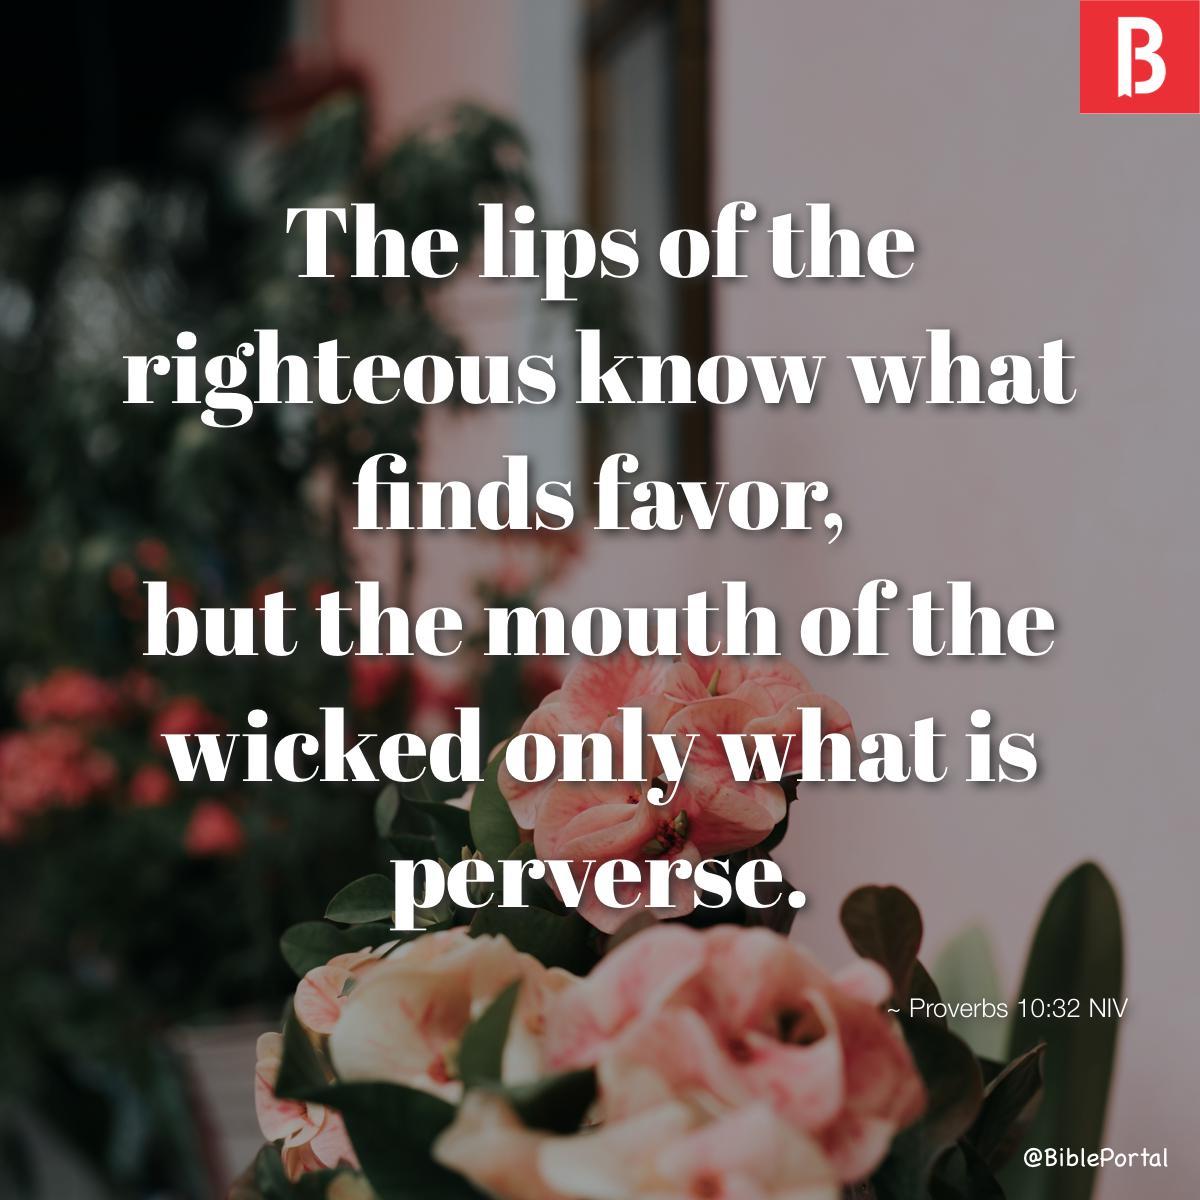 Proverbs 10:32 NIV